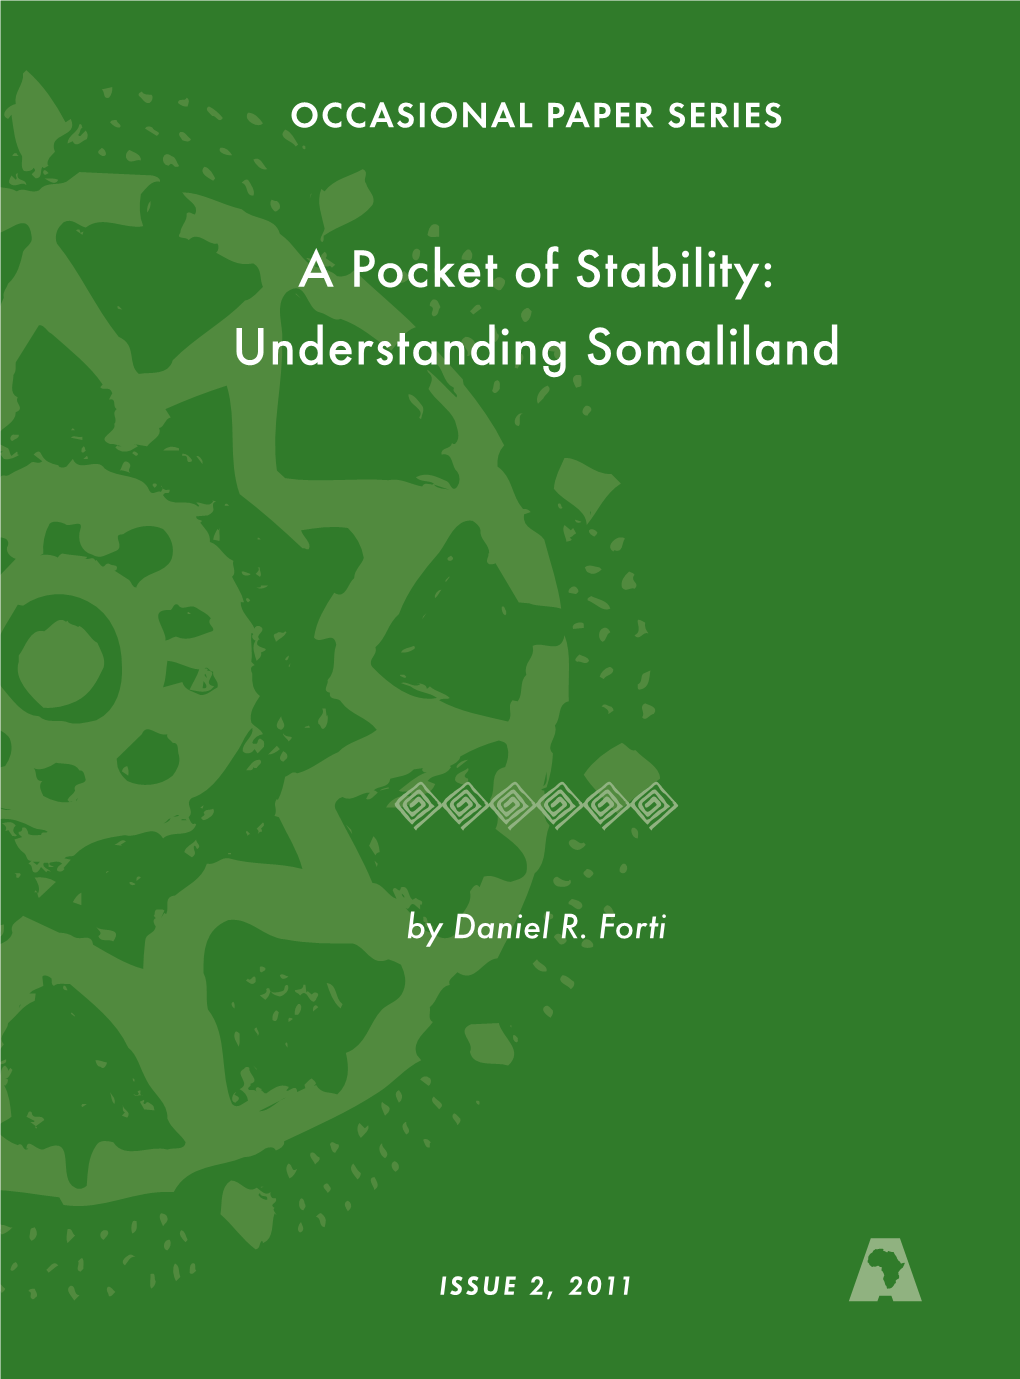 Understanding Somaliland